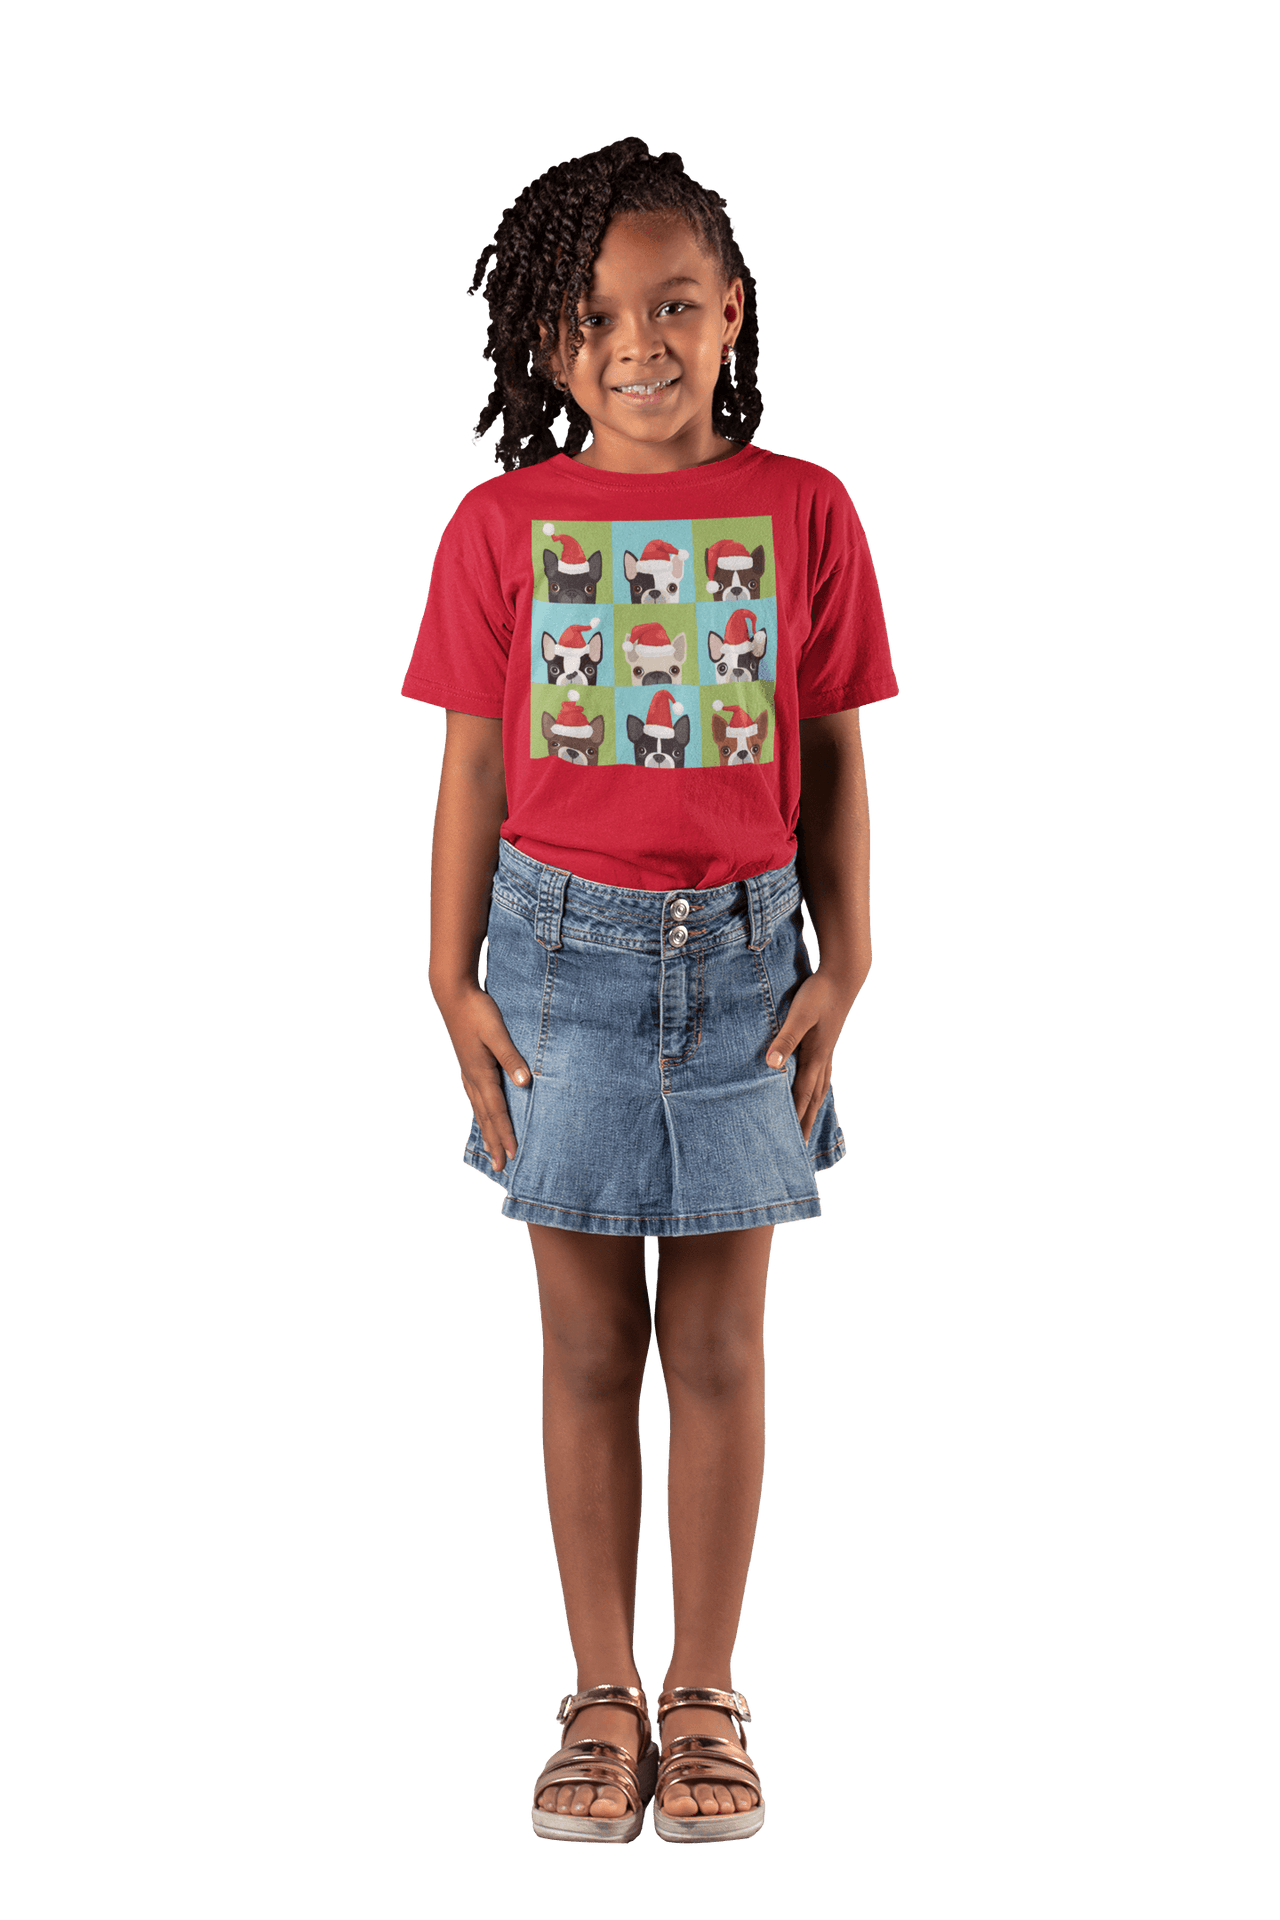 Santa Hat Pugs Christmas Kids T-Shirt 8Ball